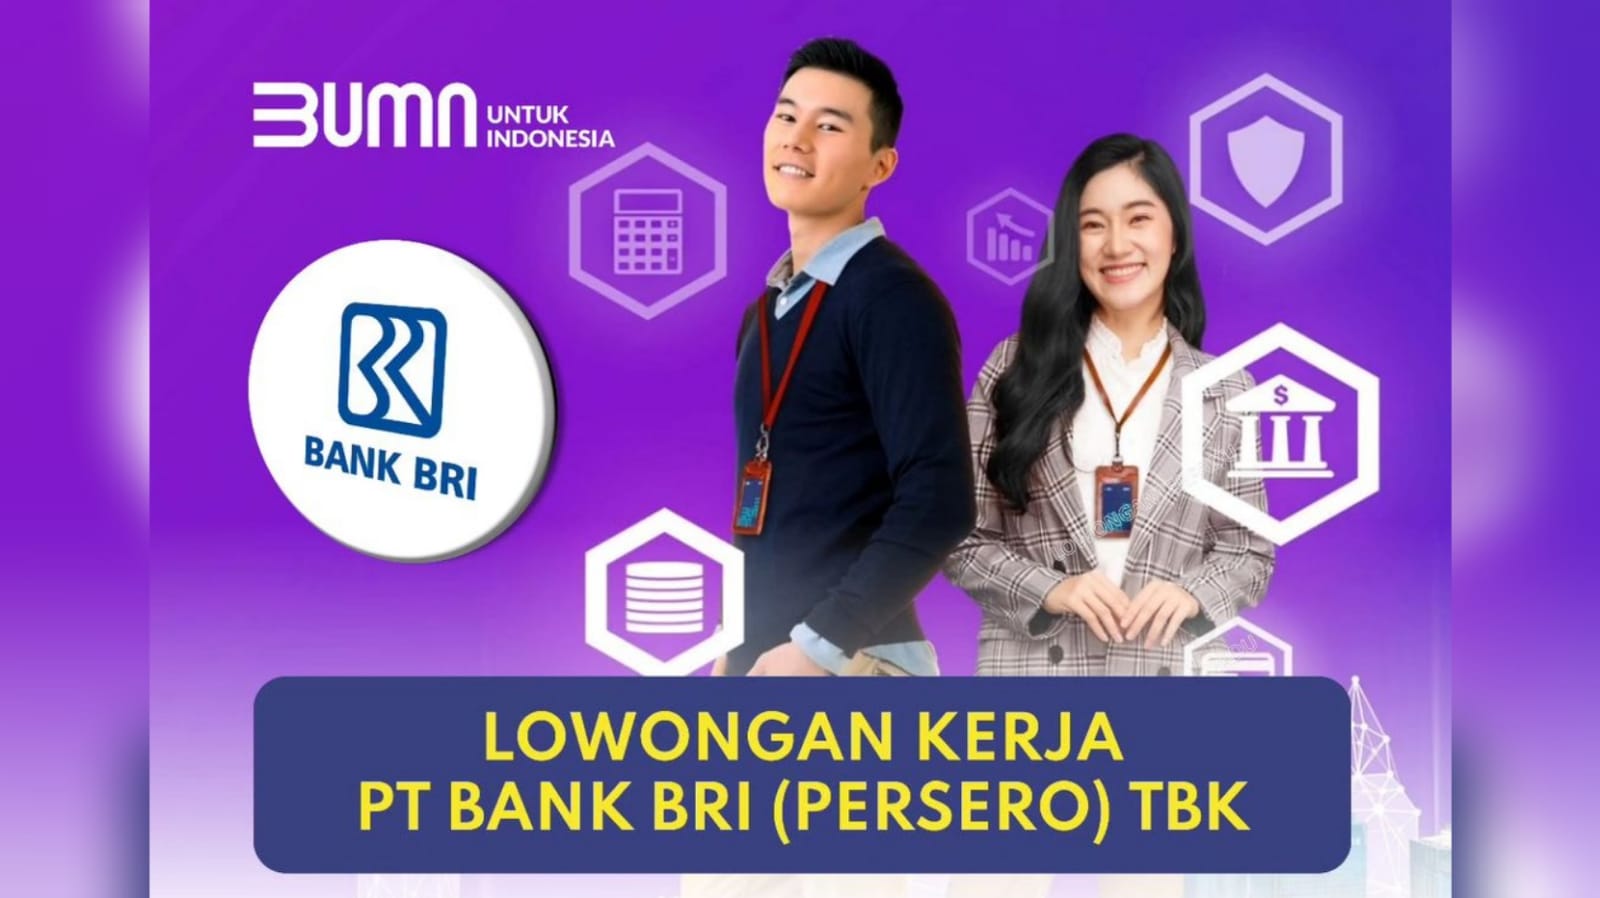 Lowongan Kerja Terbaru BUMN Bank BRI Lulusan D3 dan S1 Semua Jurusan, Ini Link Pendaftarannya!